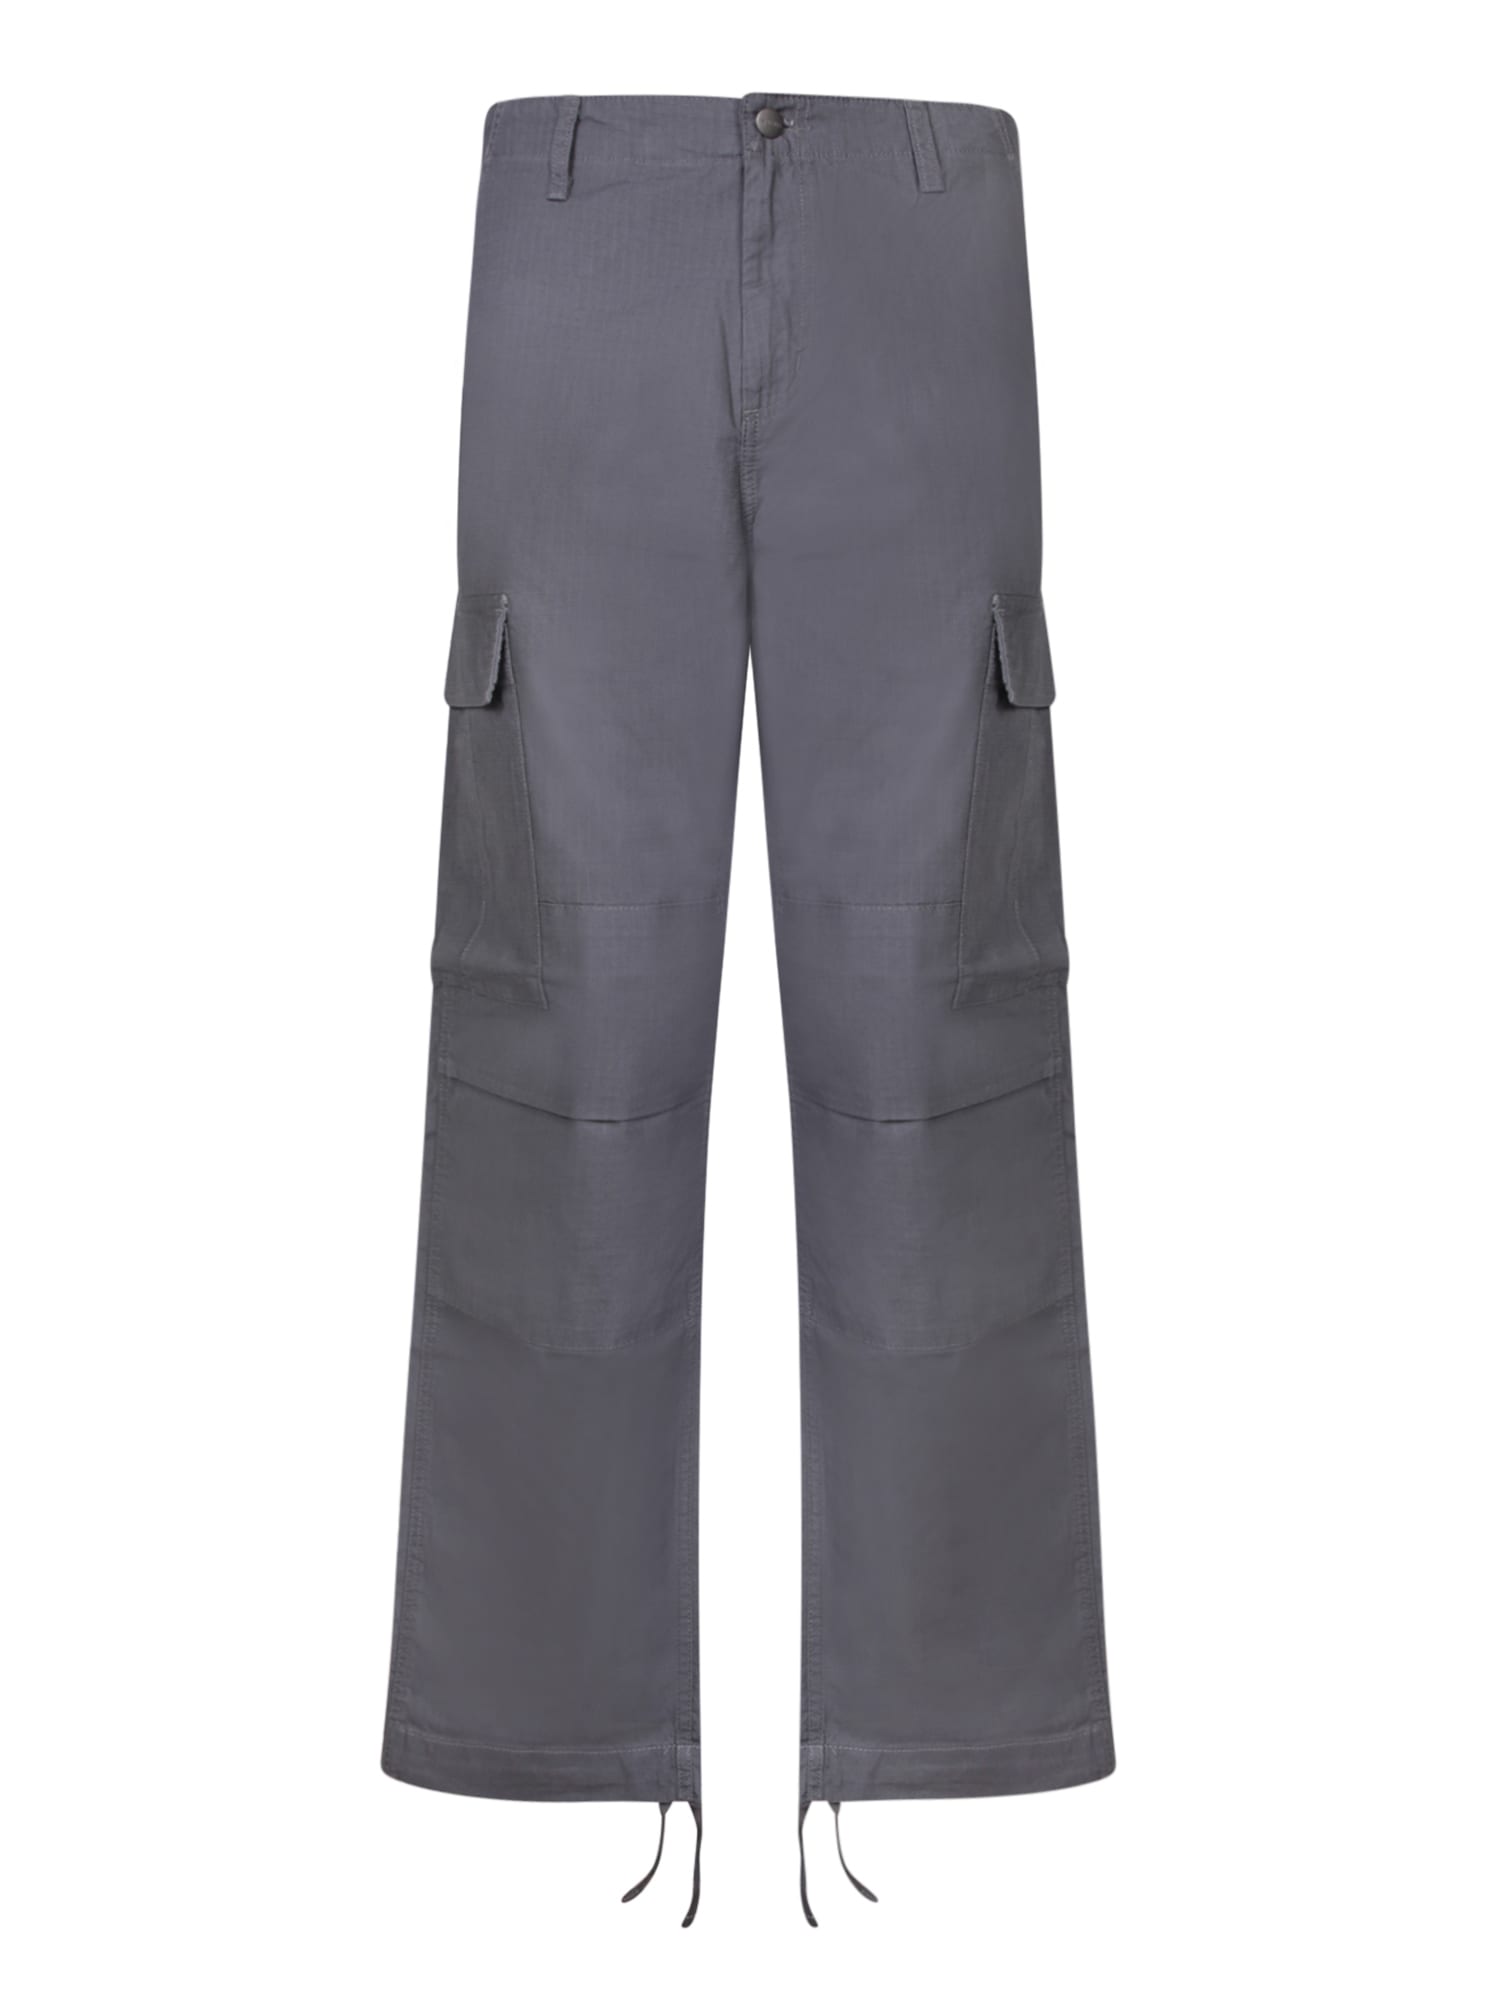 Shop Carhartt Columbia Grey Cargo Pants